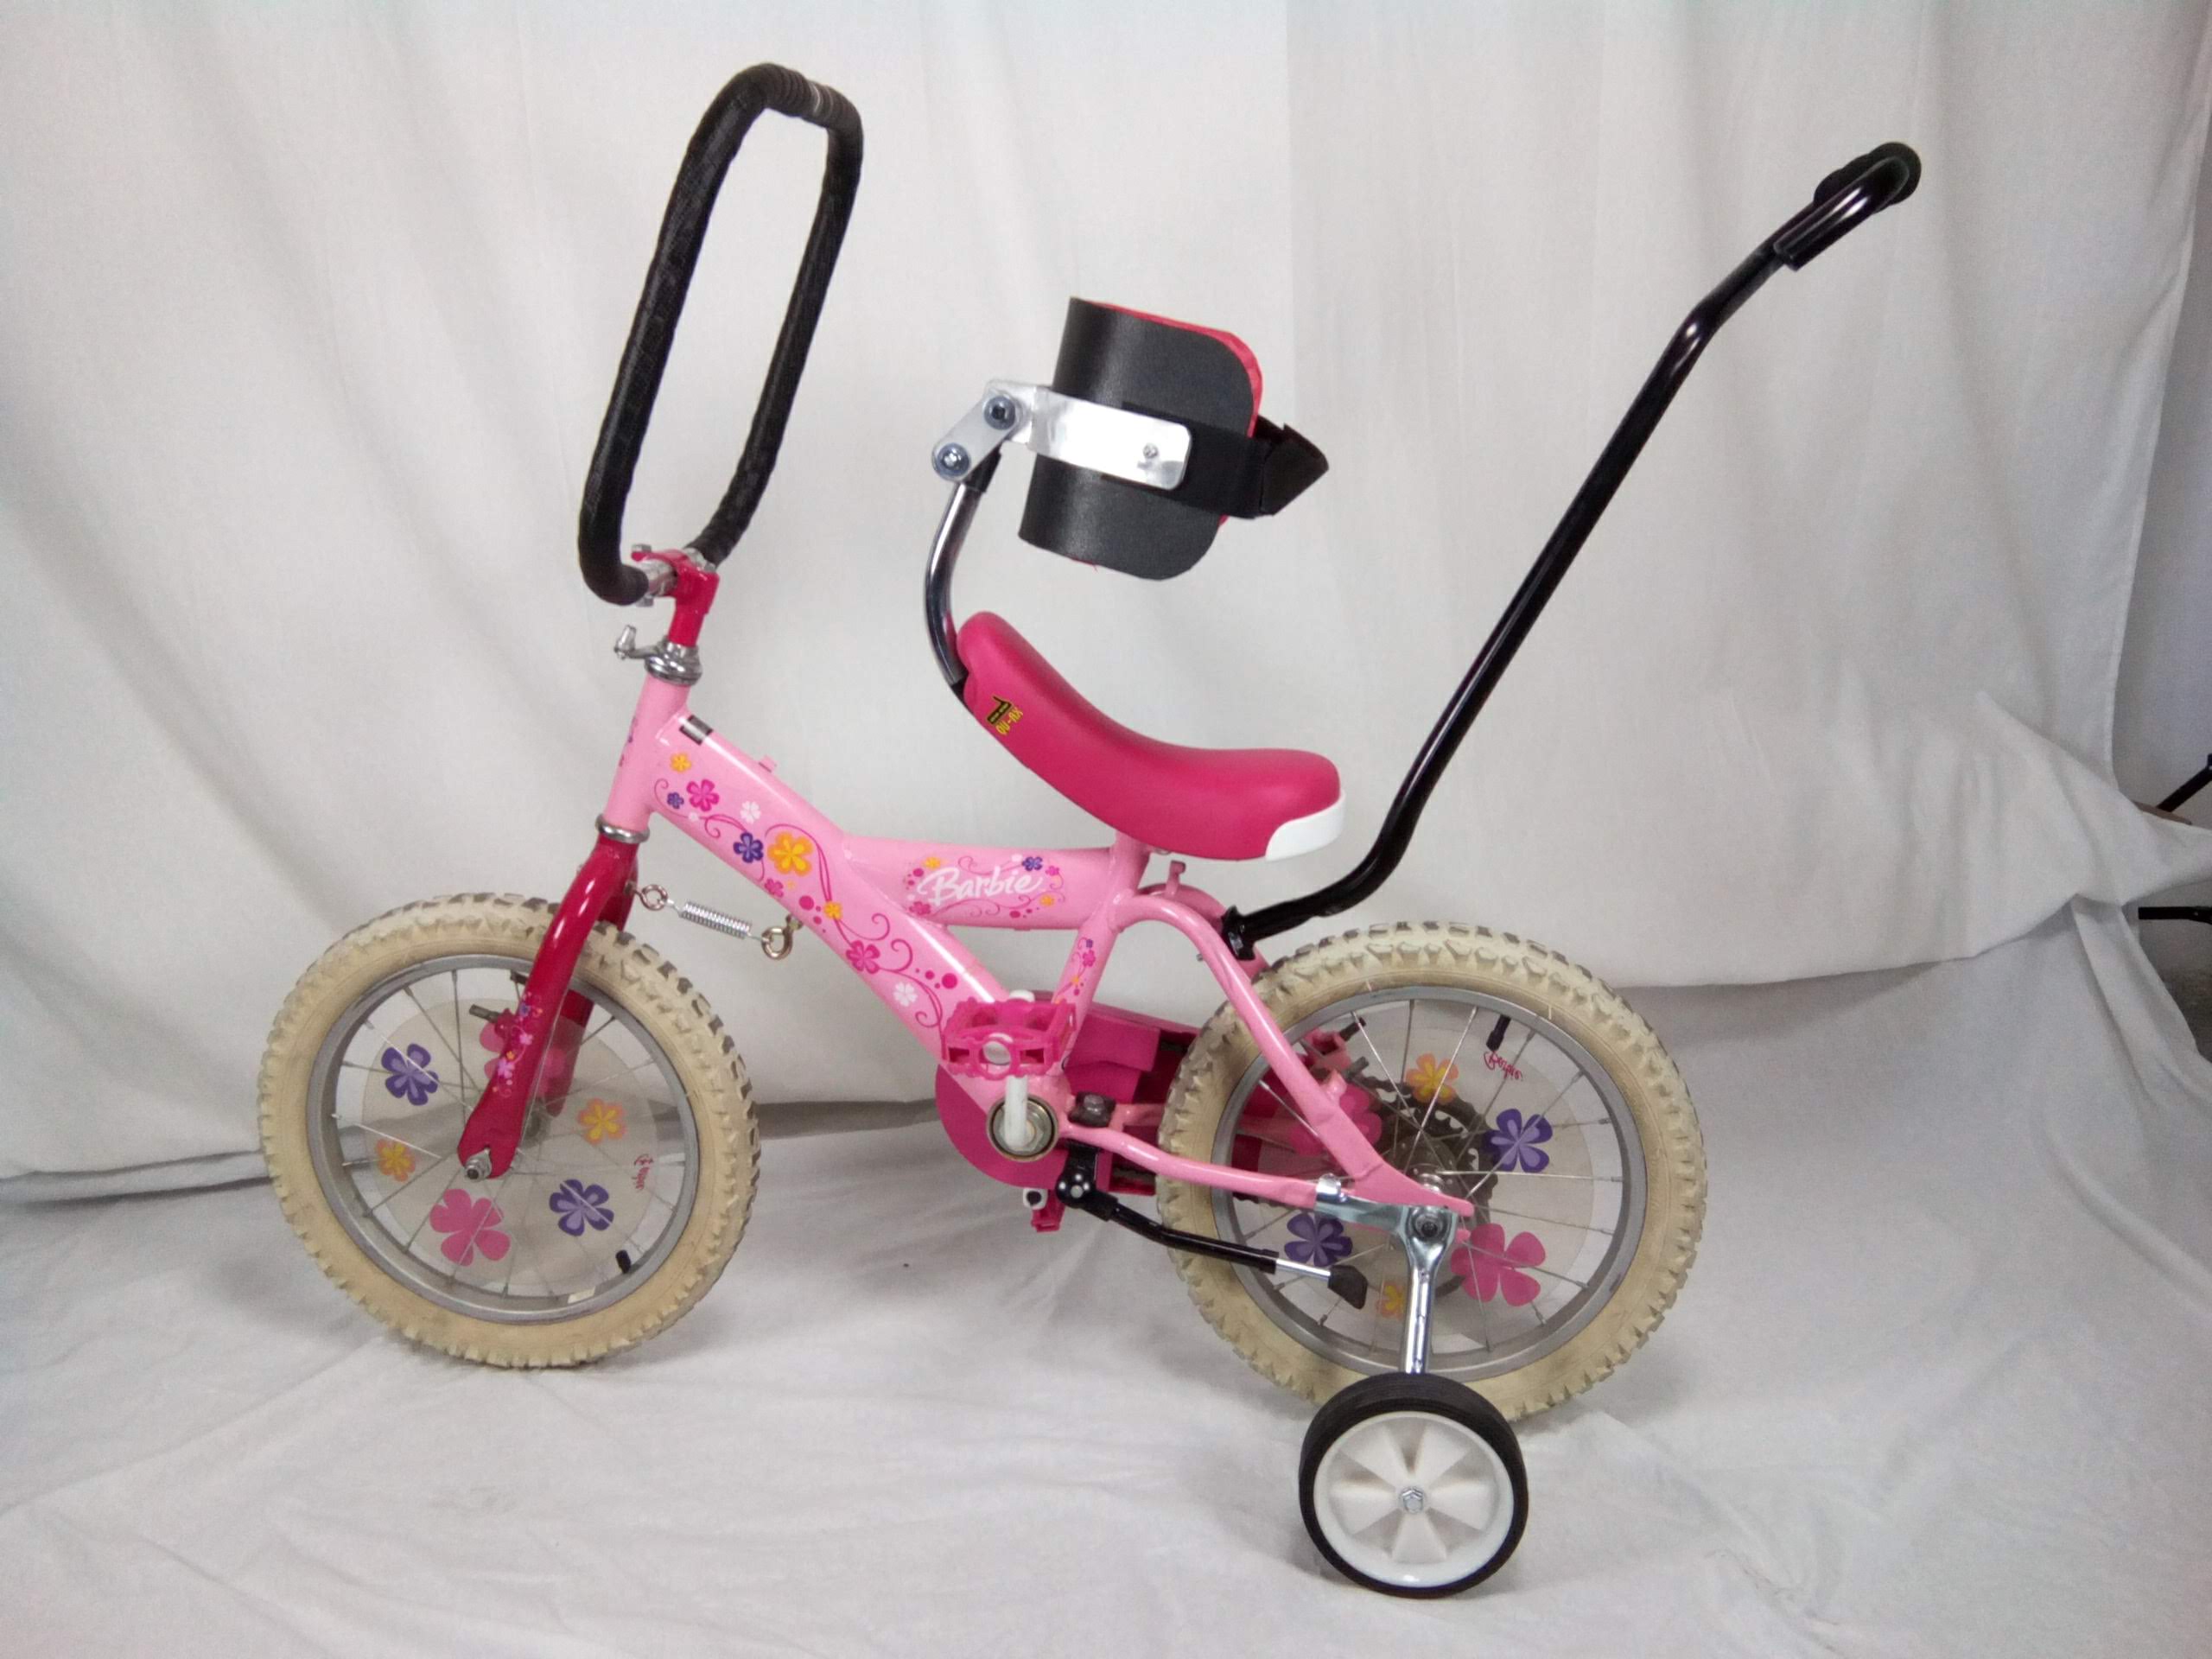 Triciclo niña adaptado a medida, bicicleta adaptada para niños con necesidades especiales a medida